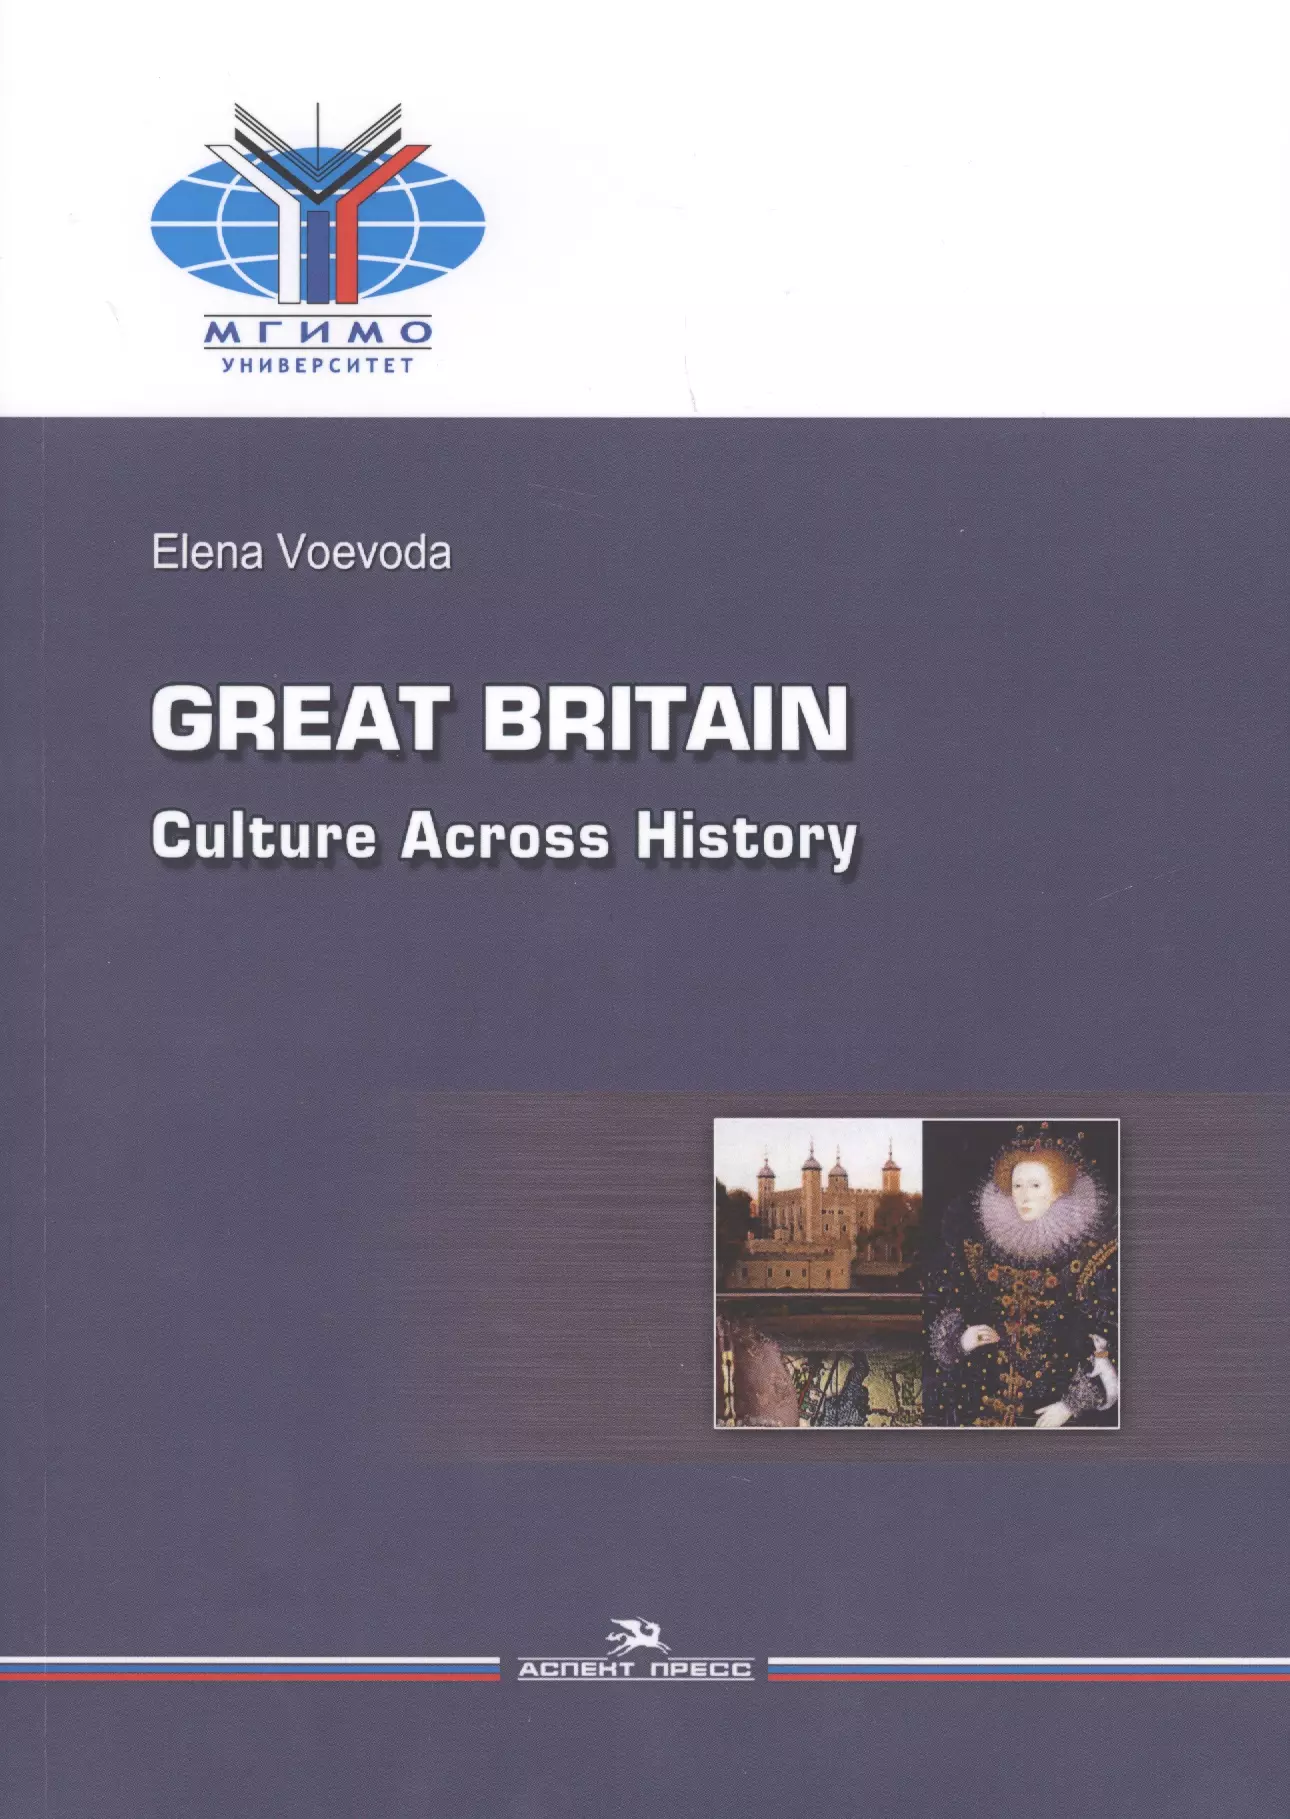 Great Britain. Culture Across History / Великобритания. История и культура